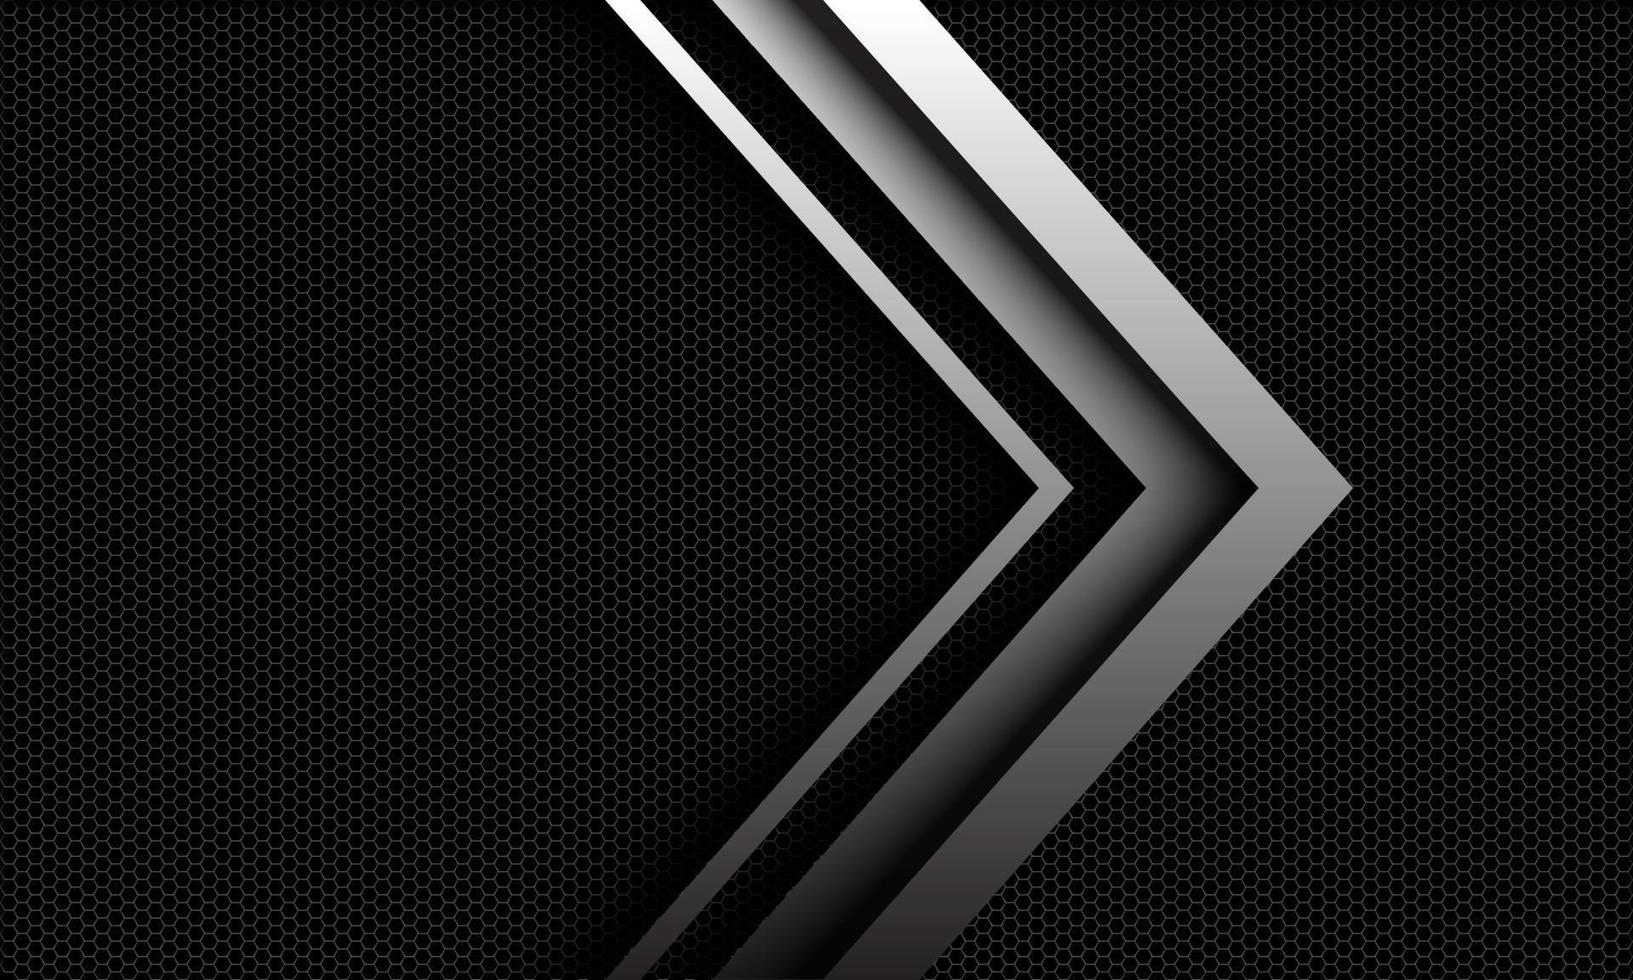 Abstract vector silver arrow direction overlap on dark metallic hexagon mesh pattern with blank space design modern luxury futuristic style background illustration.